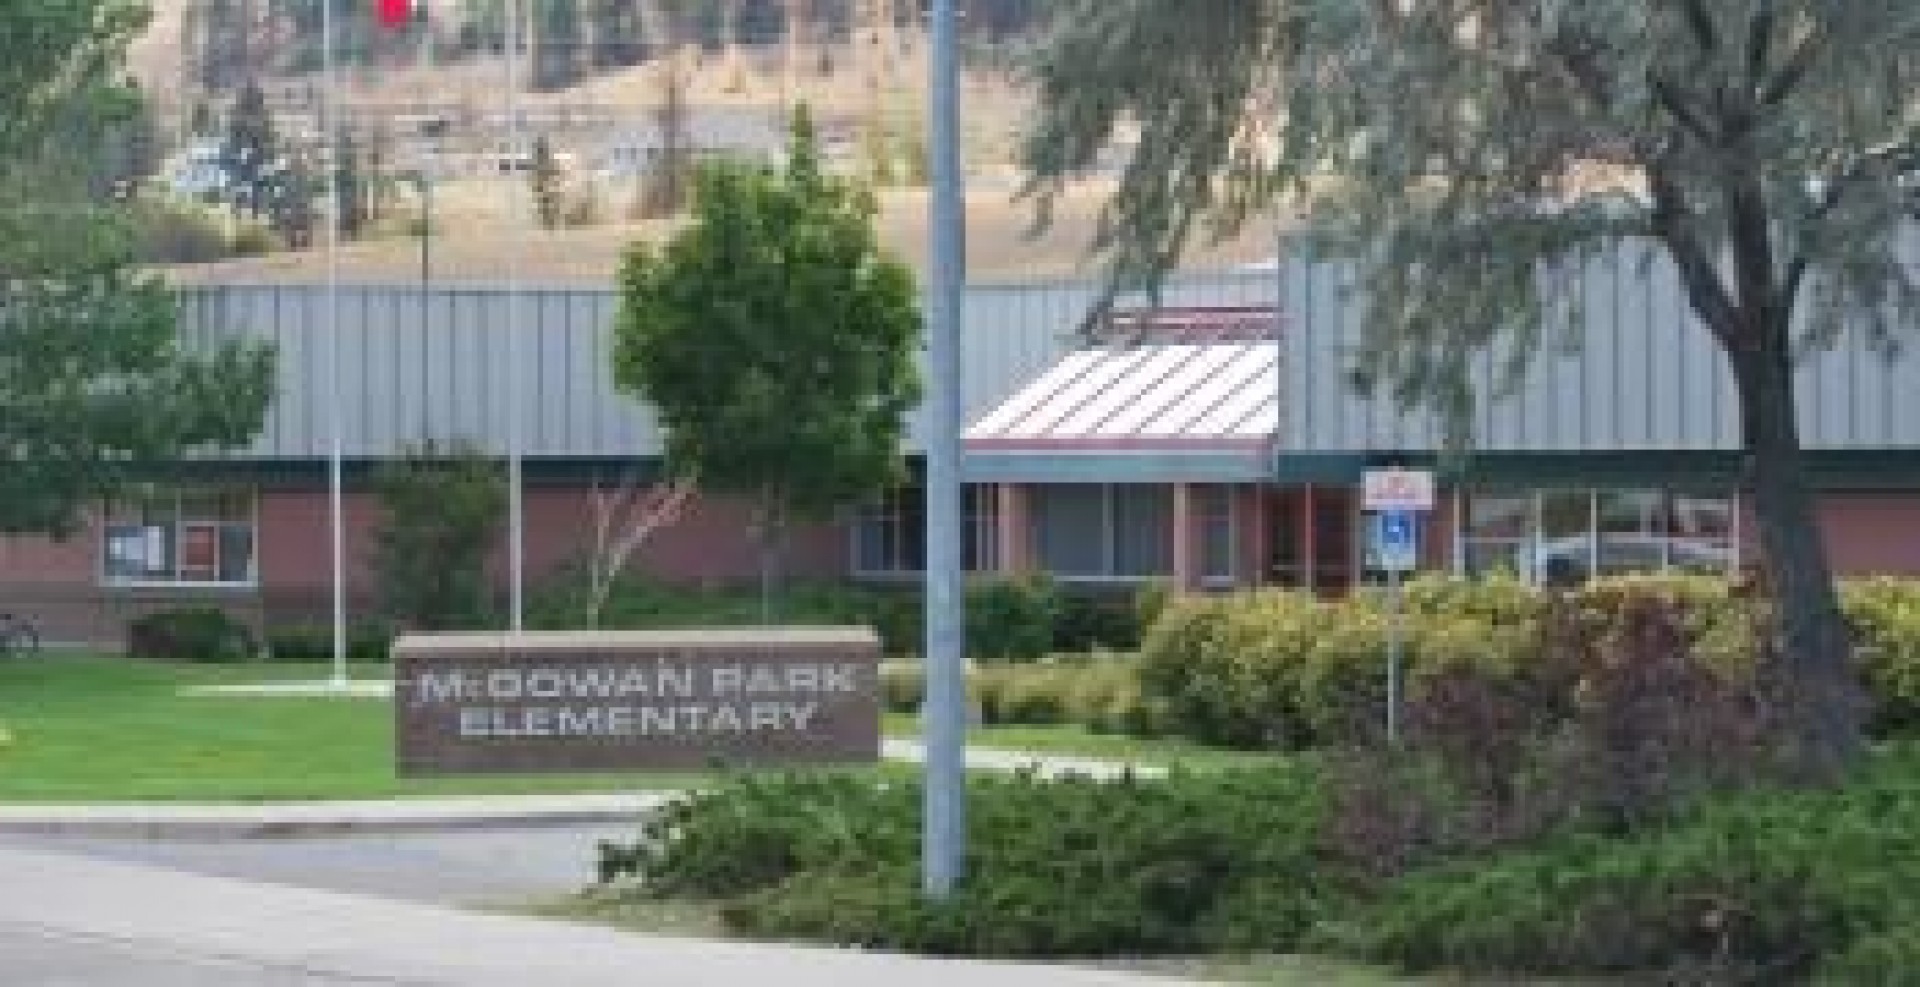 McGowan Park Elementary